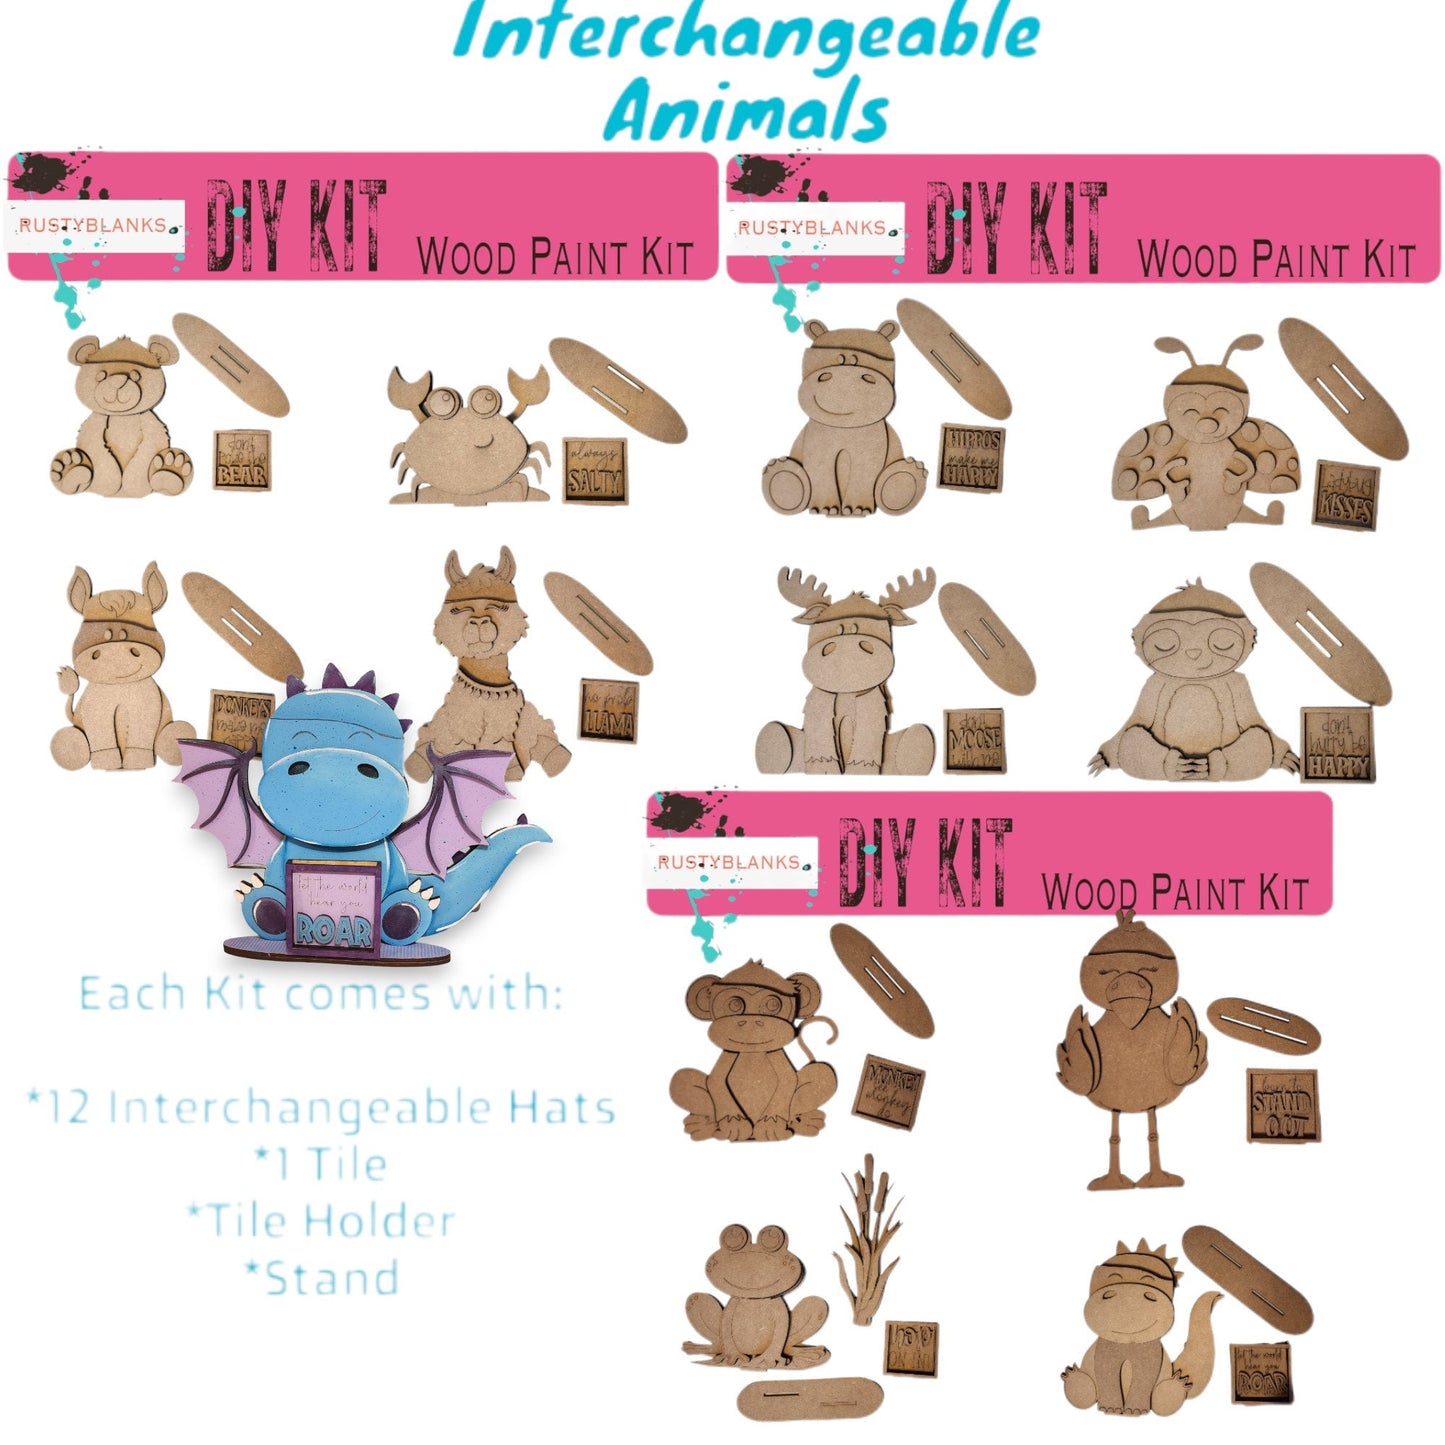 Hippo Interchangeable Animal with 13 Interchangeable Seasonal Hats, Insert and tile holder, Season DIY Decor